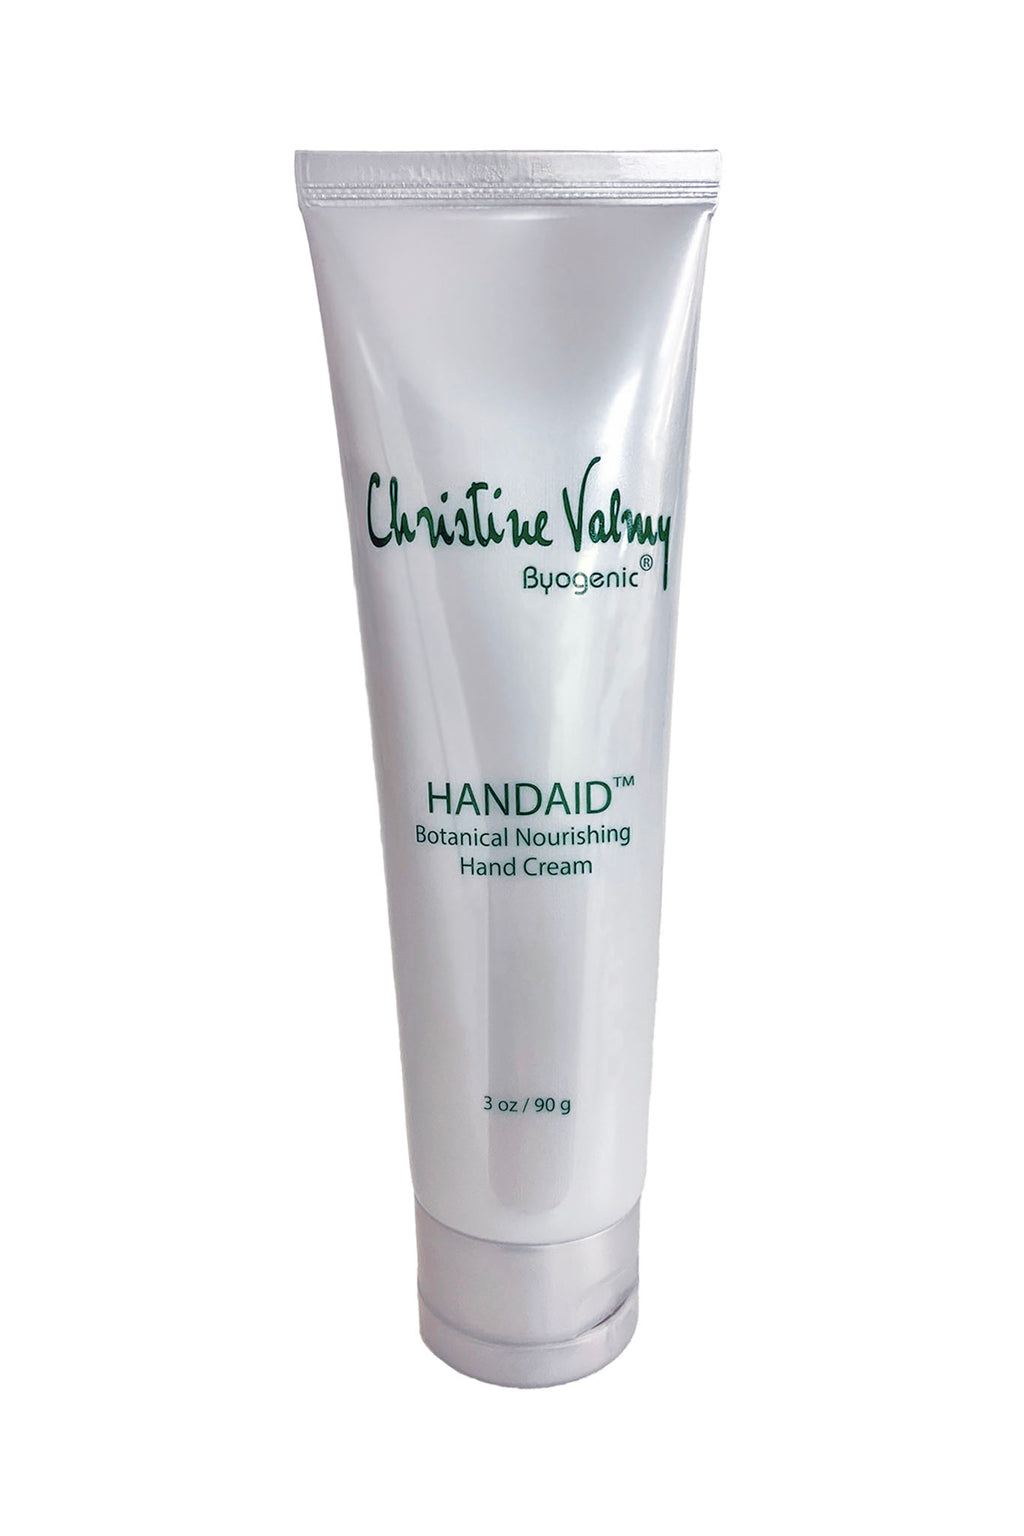 Christine Valmy Handaid botanical nourishing hand cream for chapped hands.